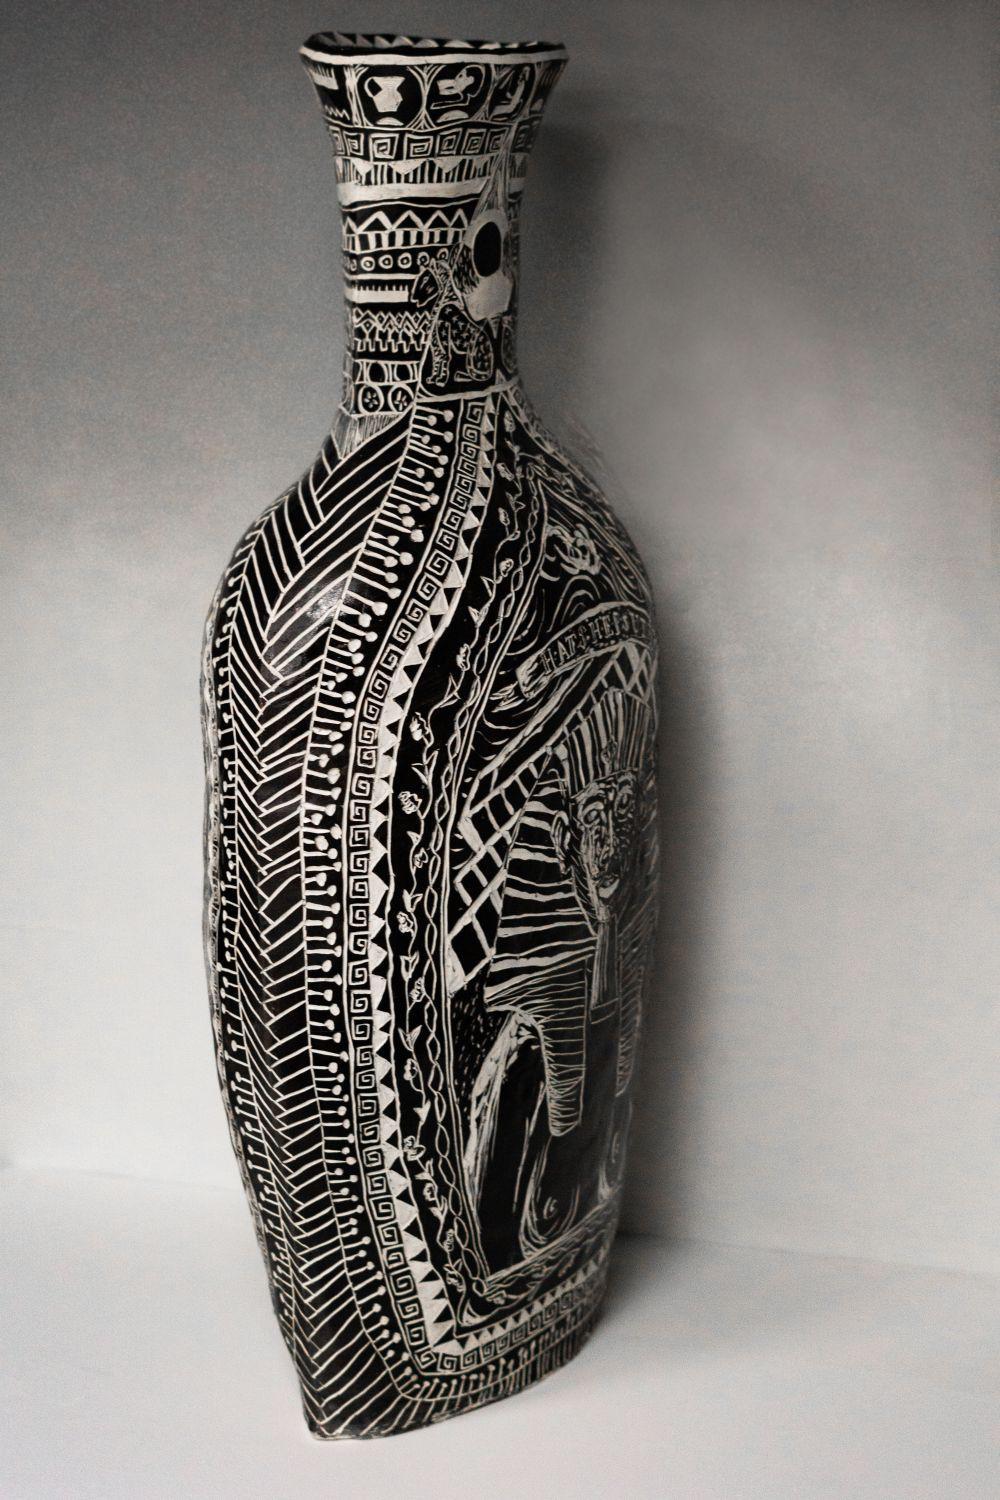 History Lesson Power Is Always Taken. Hand Carved Large Porcelain Vase - Black Figurative Sculpture by Alex Hodge